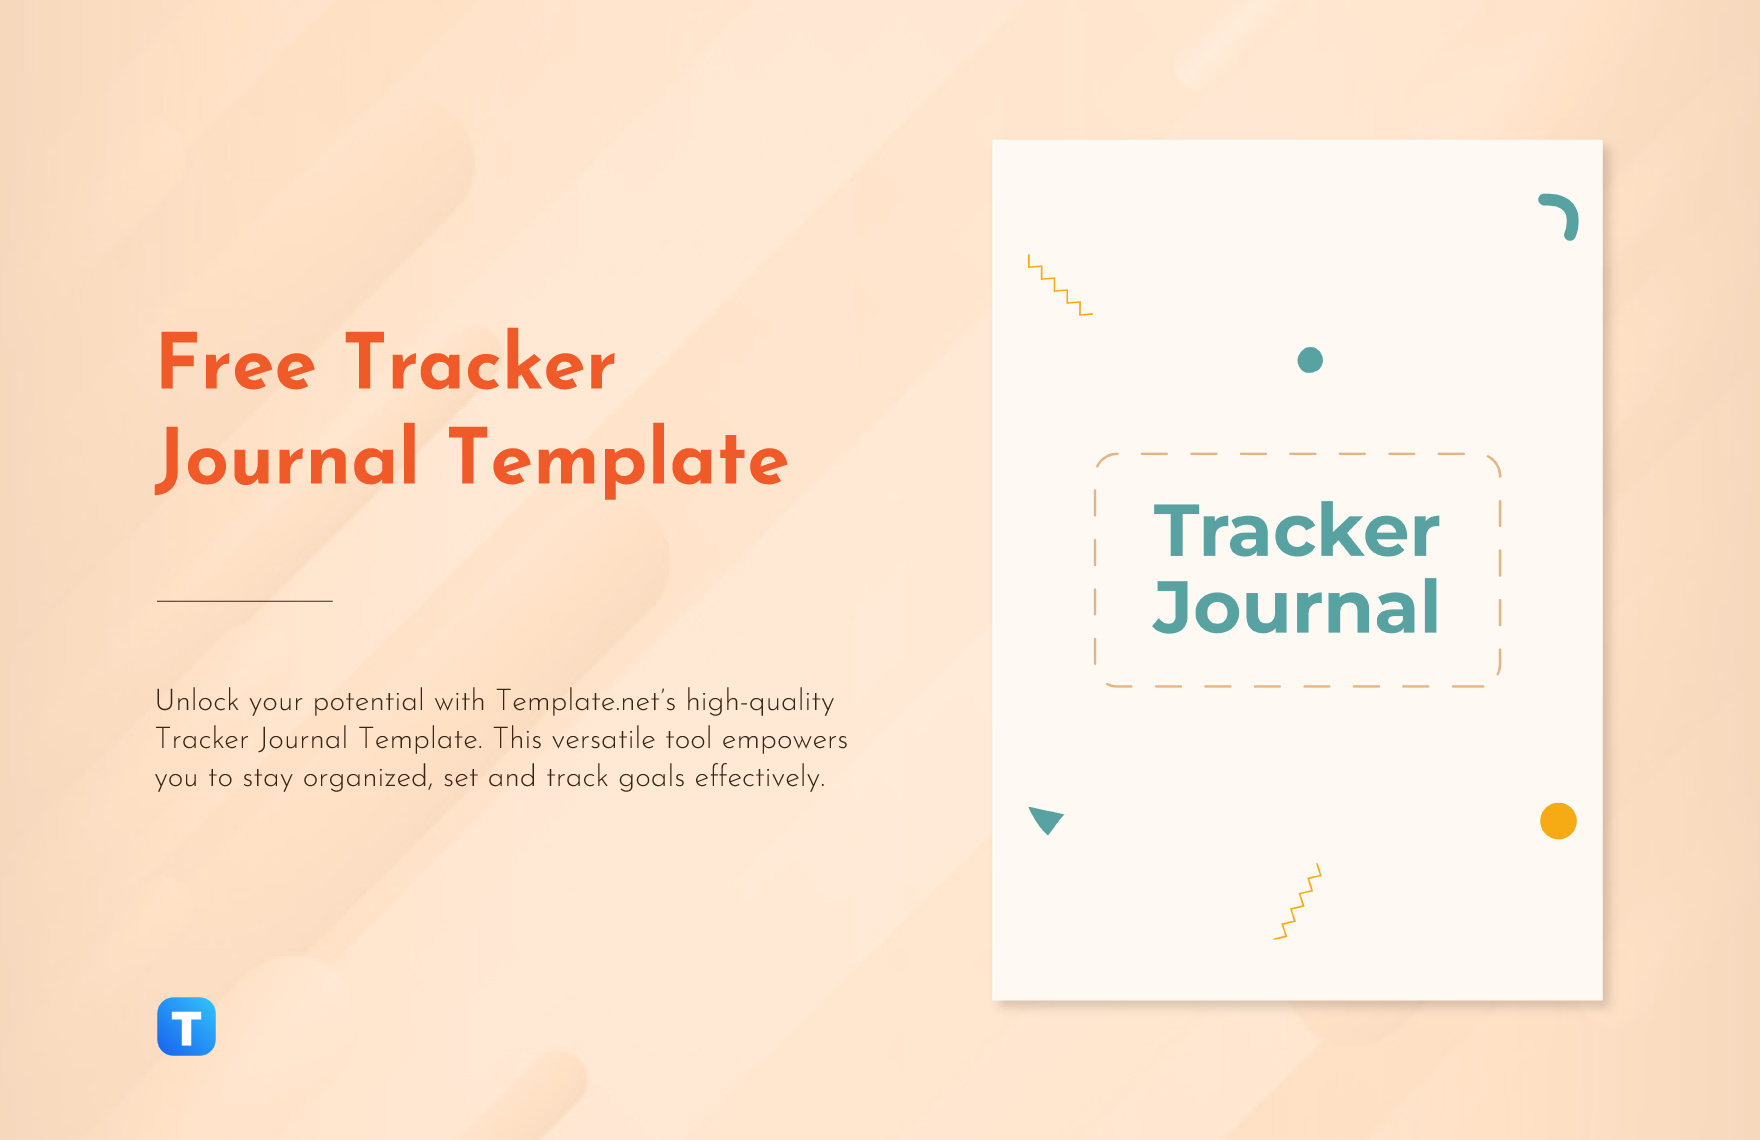 Free Tracker Journal Template